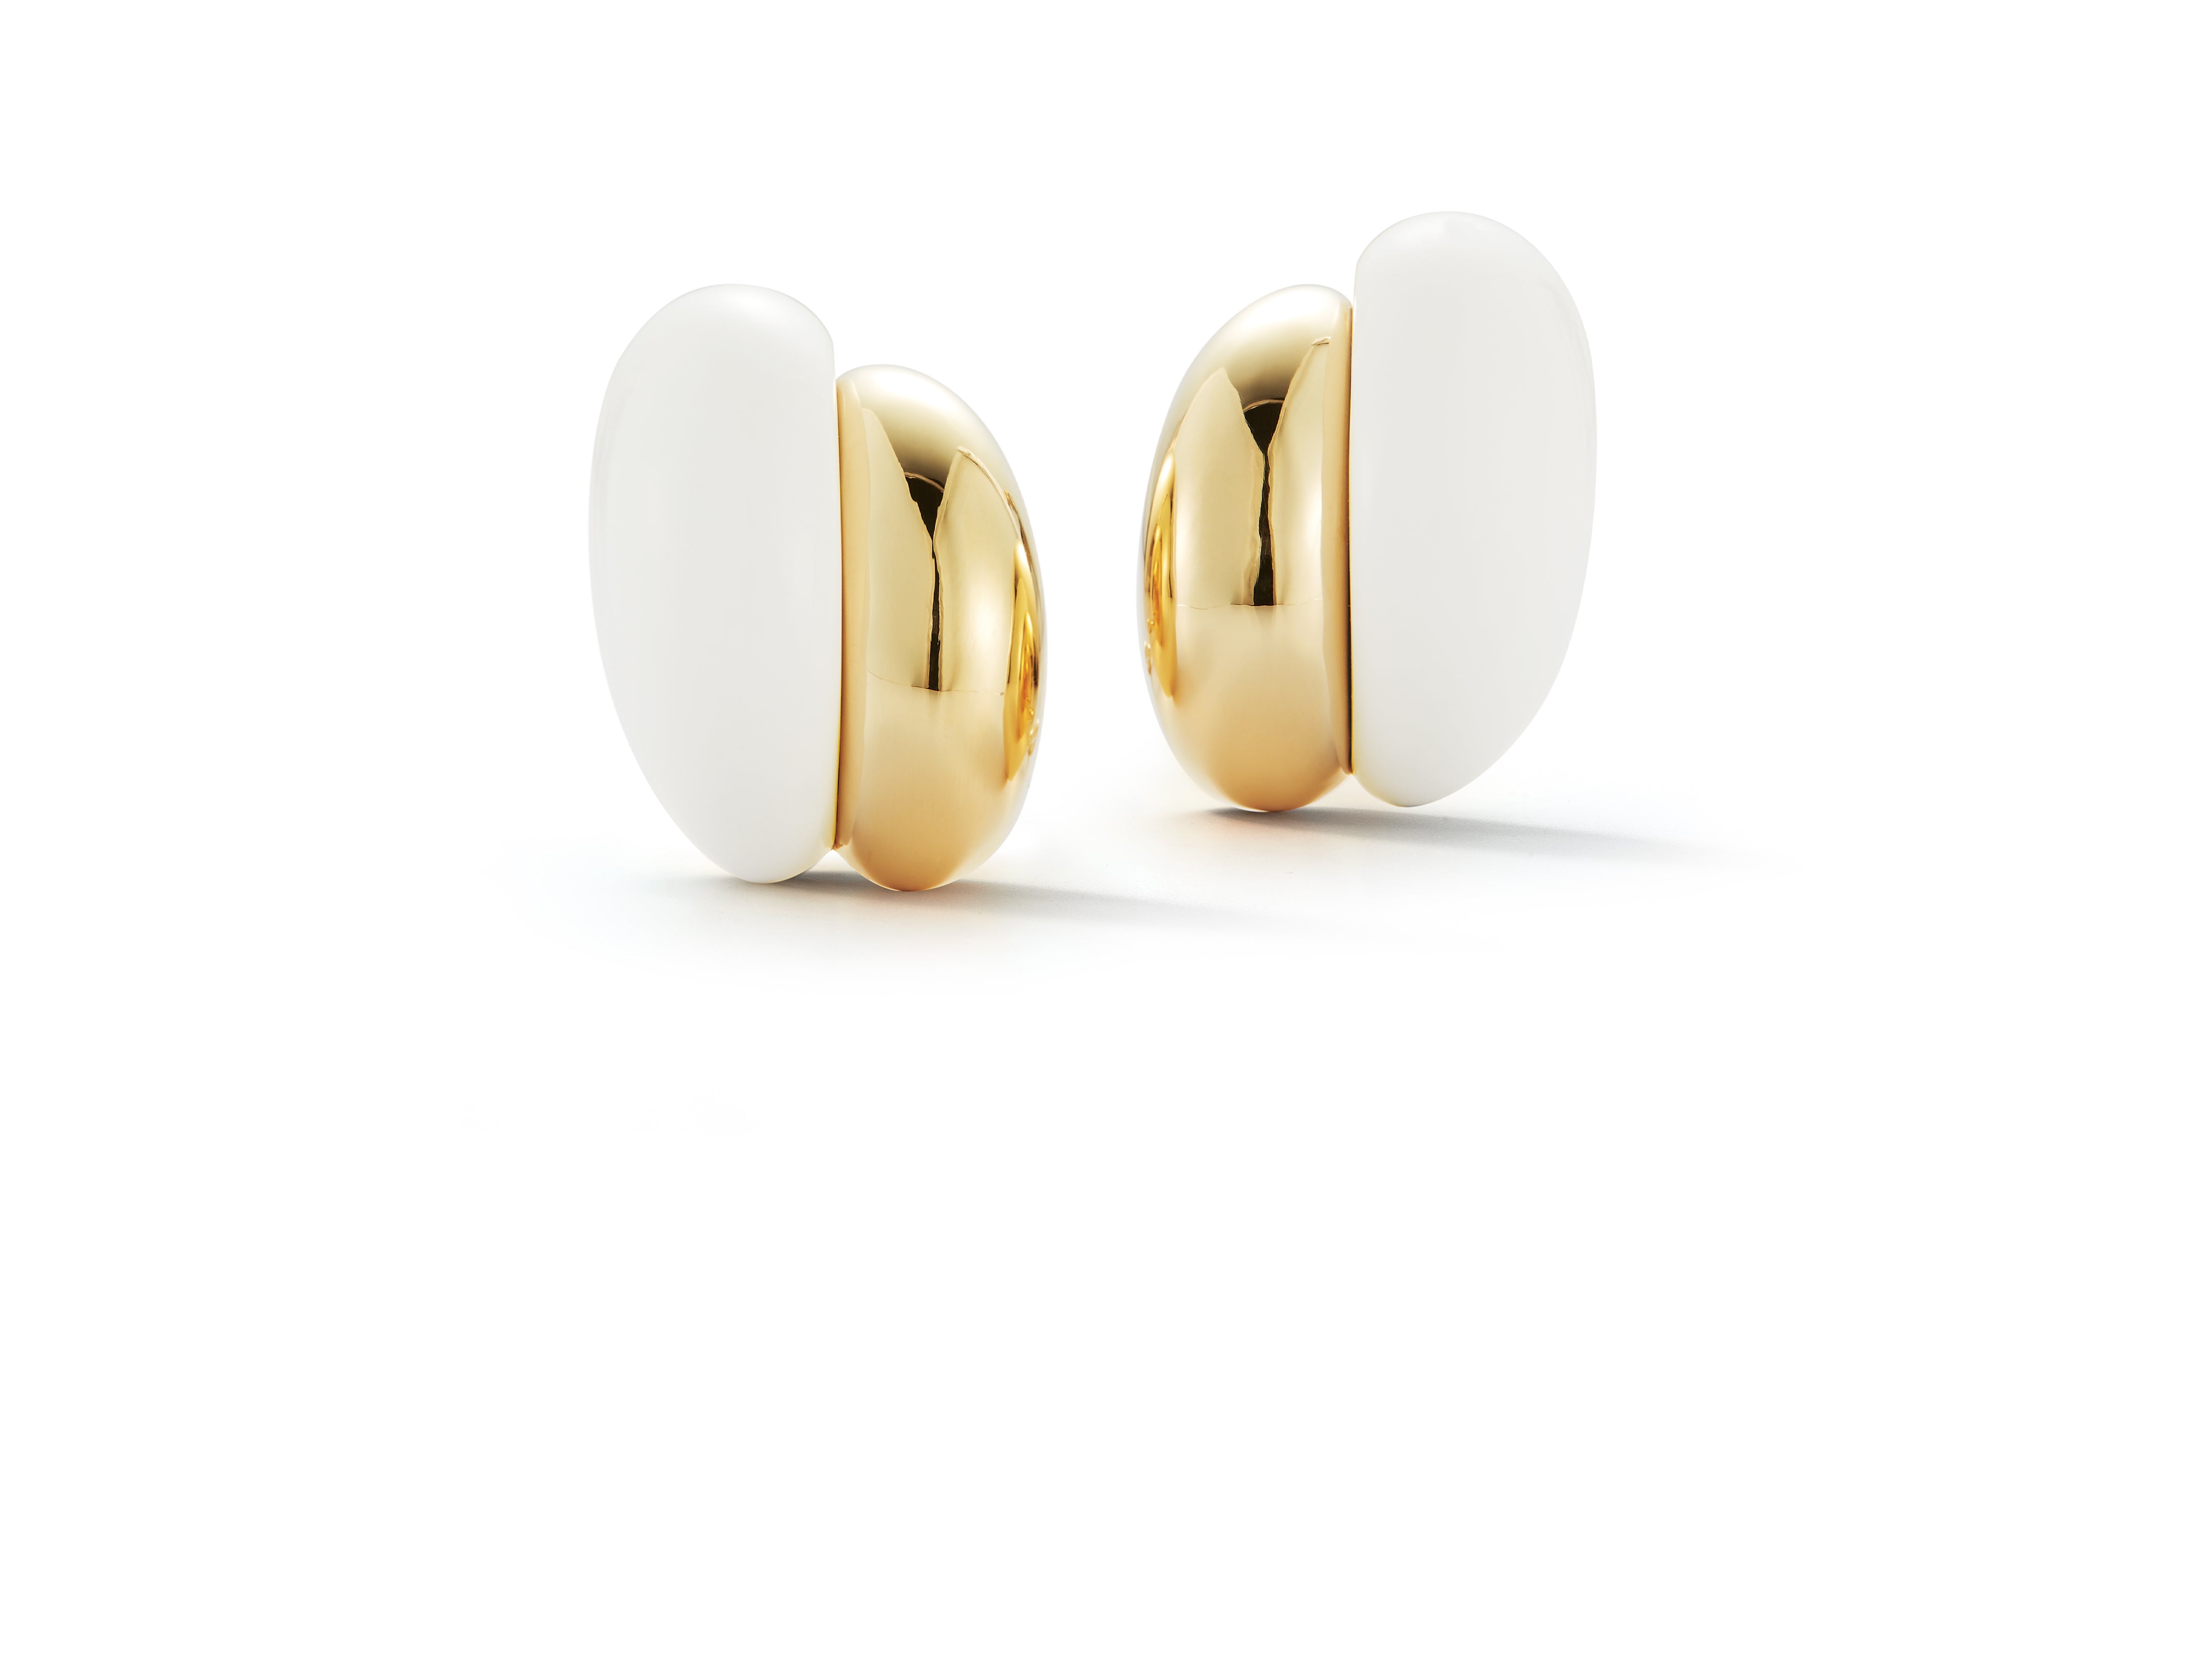 Silhouette Earrings in White Ceramic